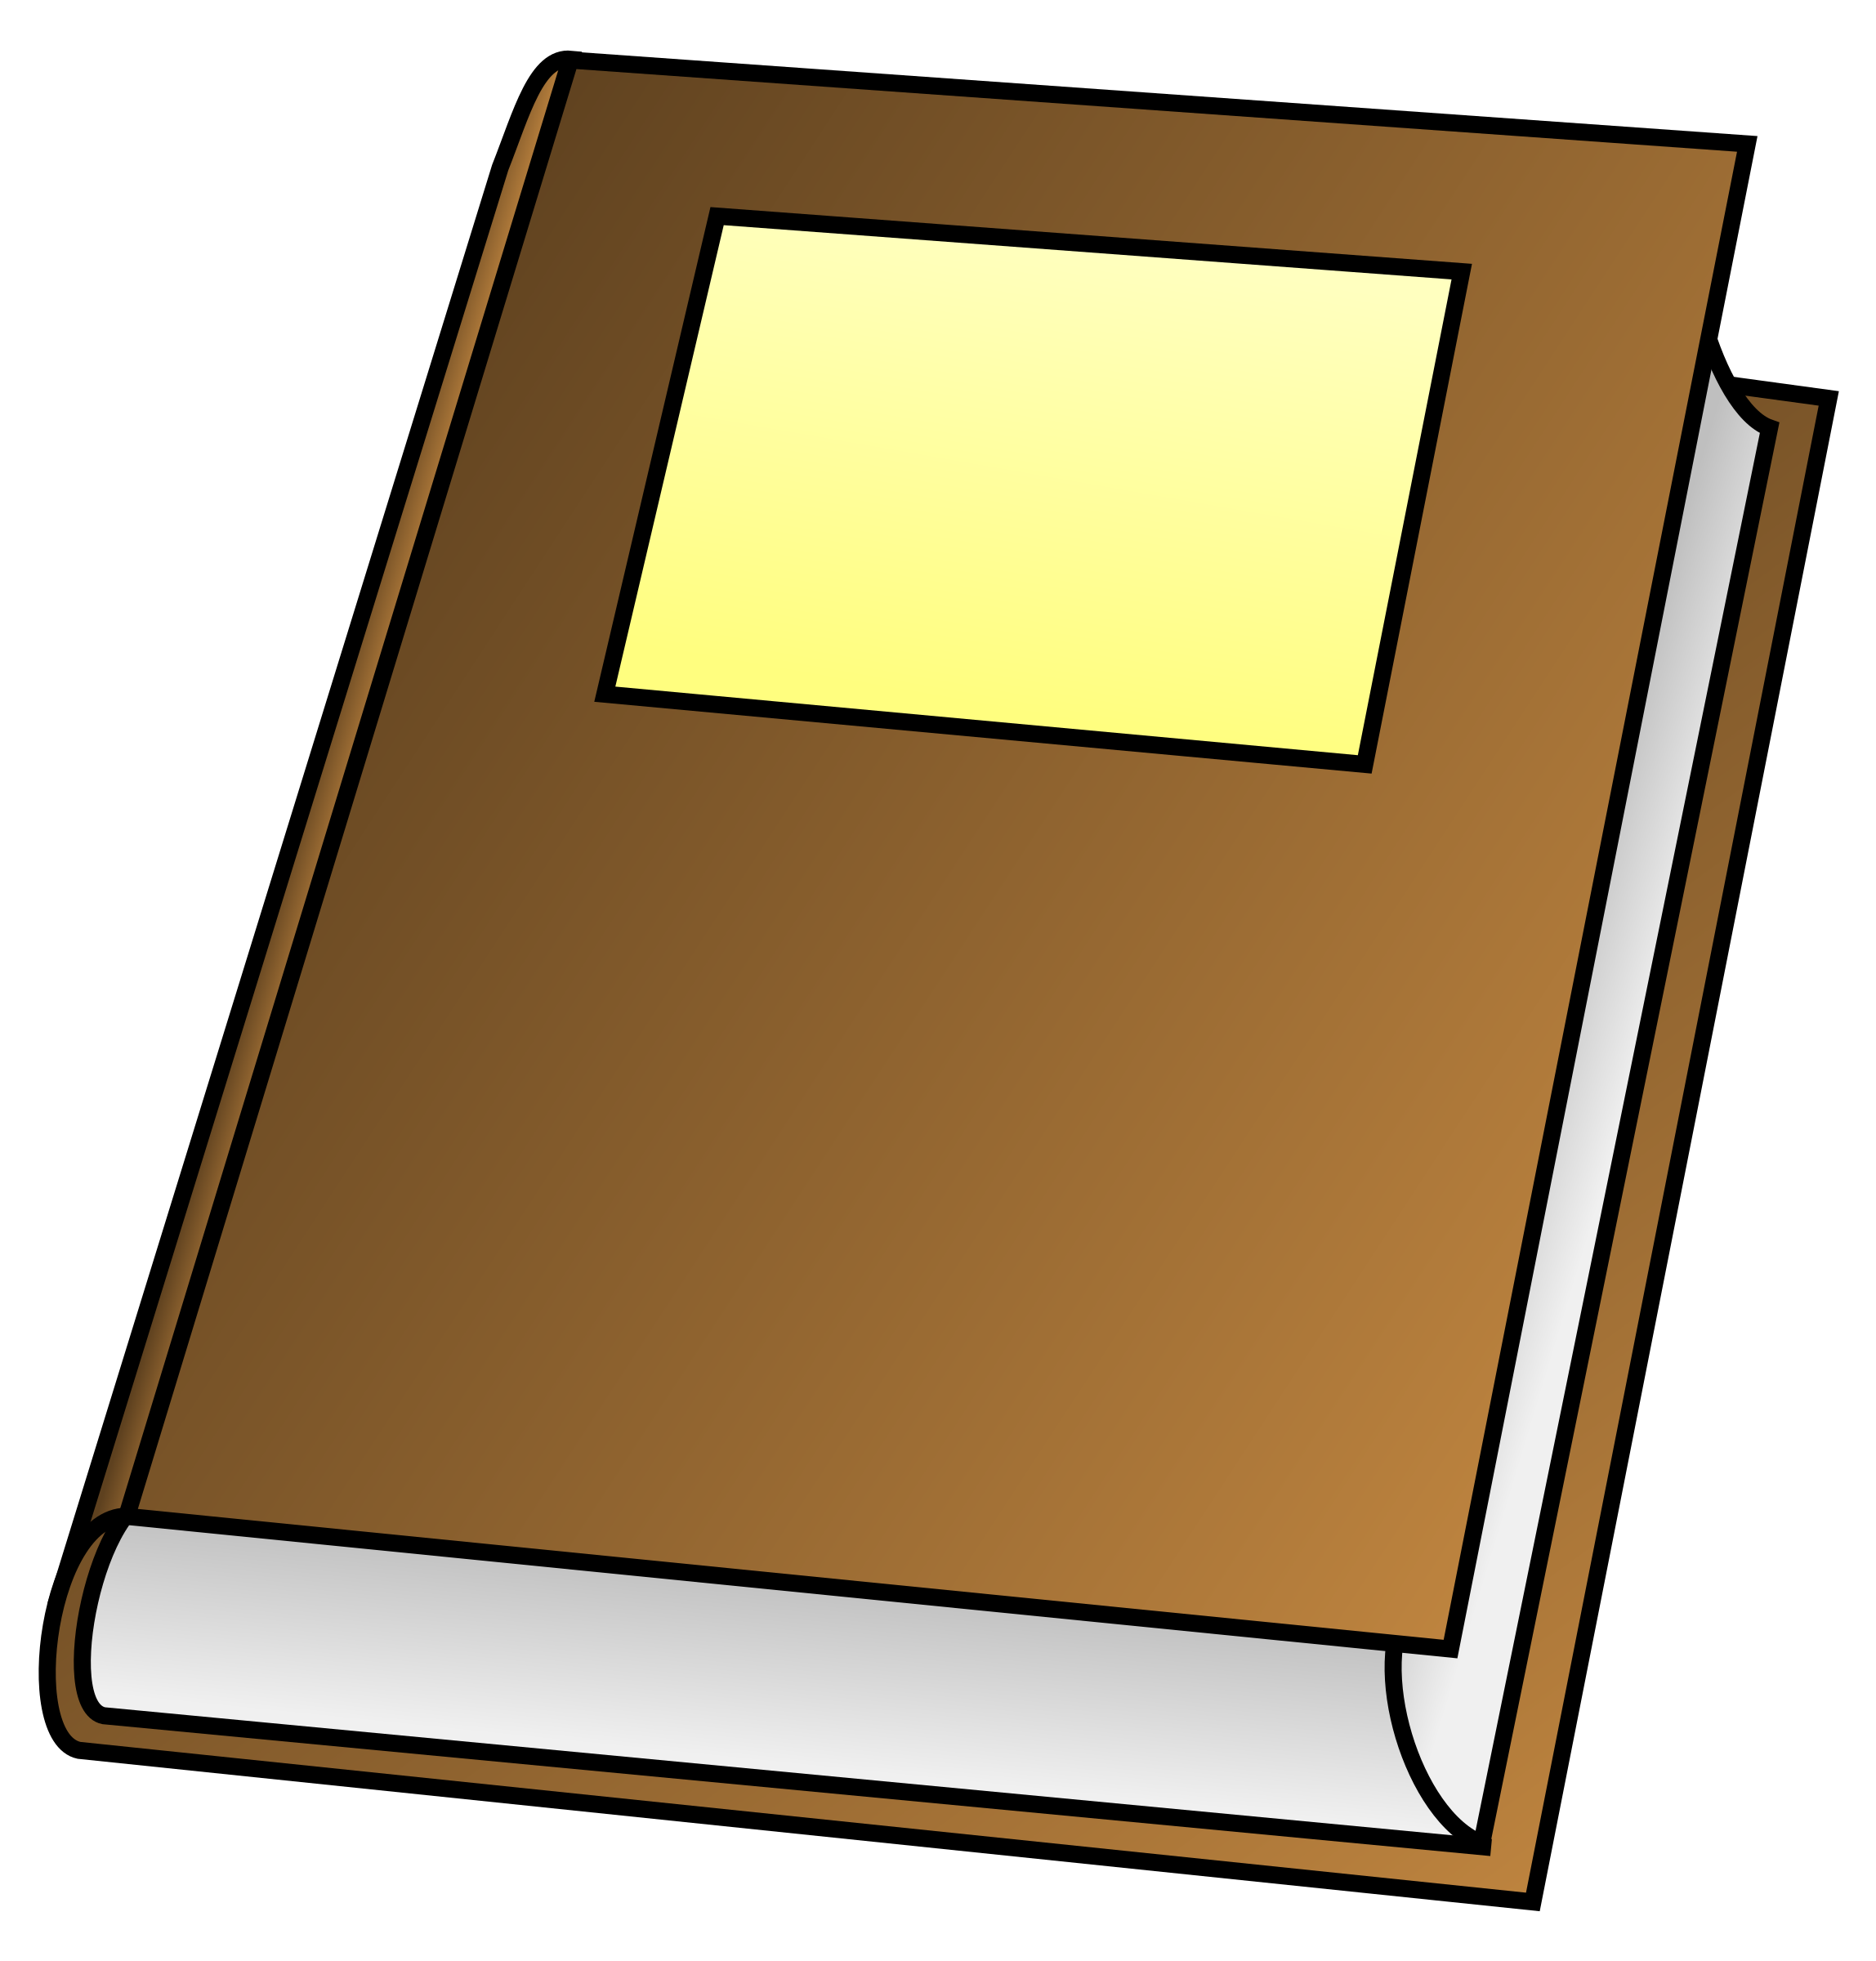 Clipart - Book